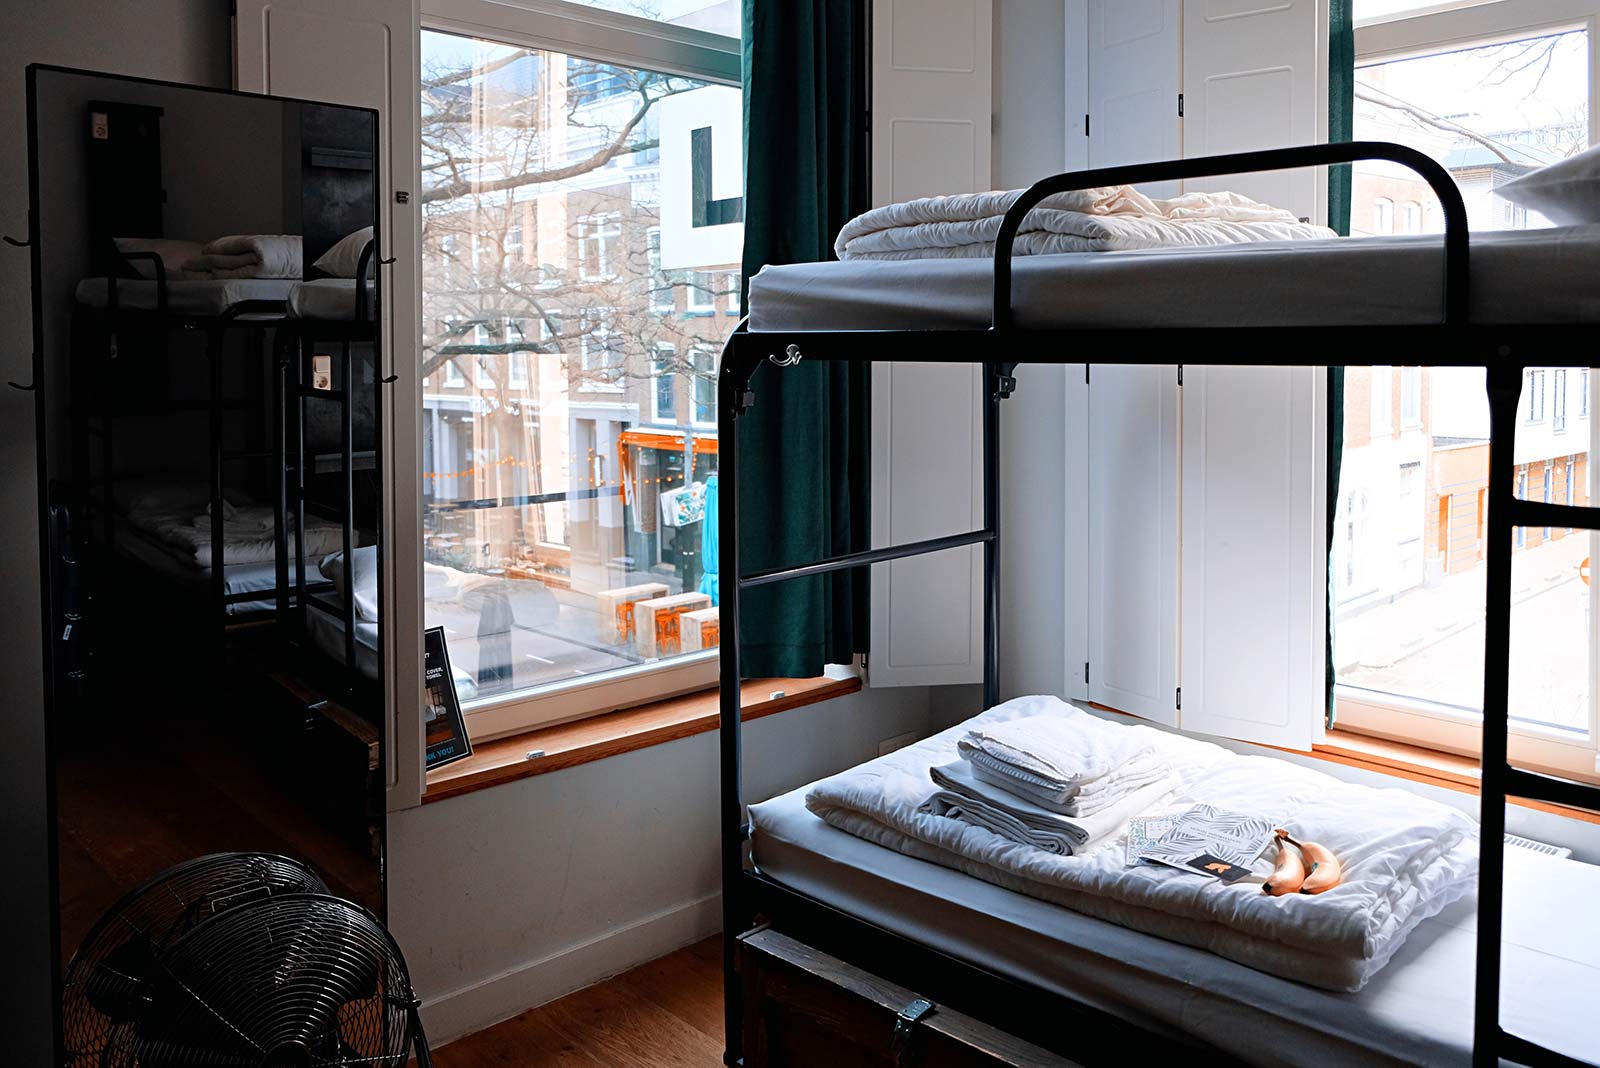 Are London hostels safe?